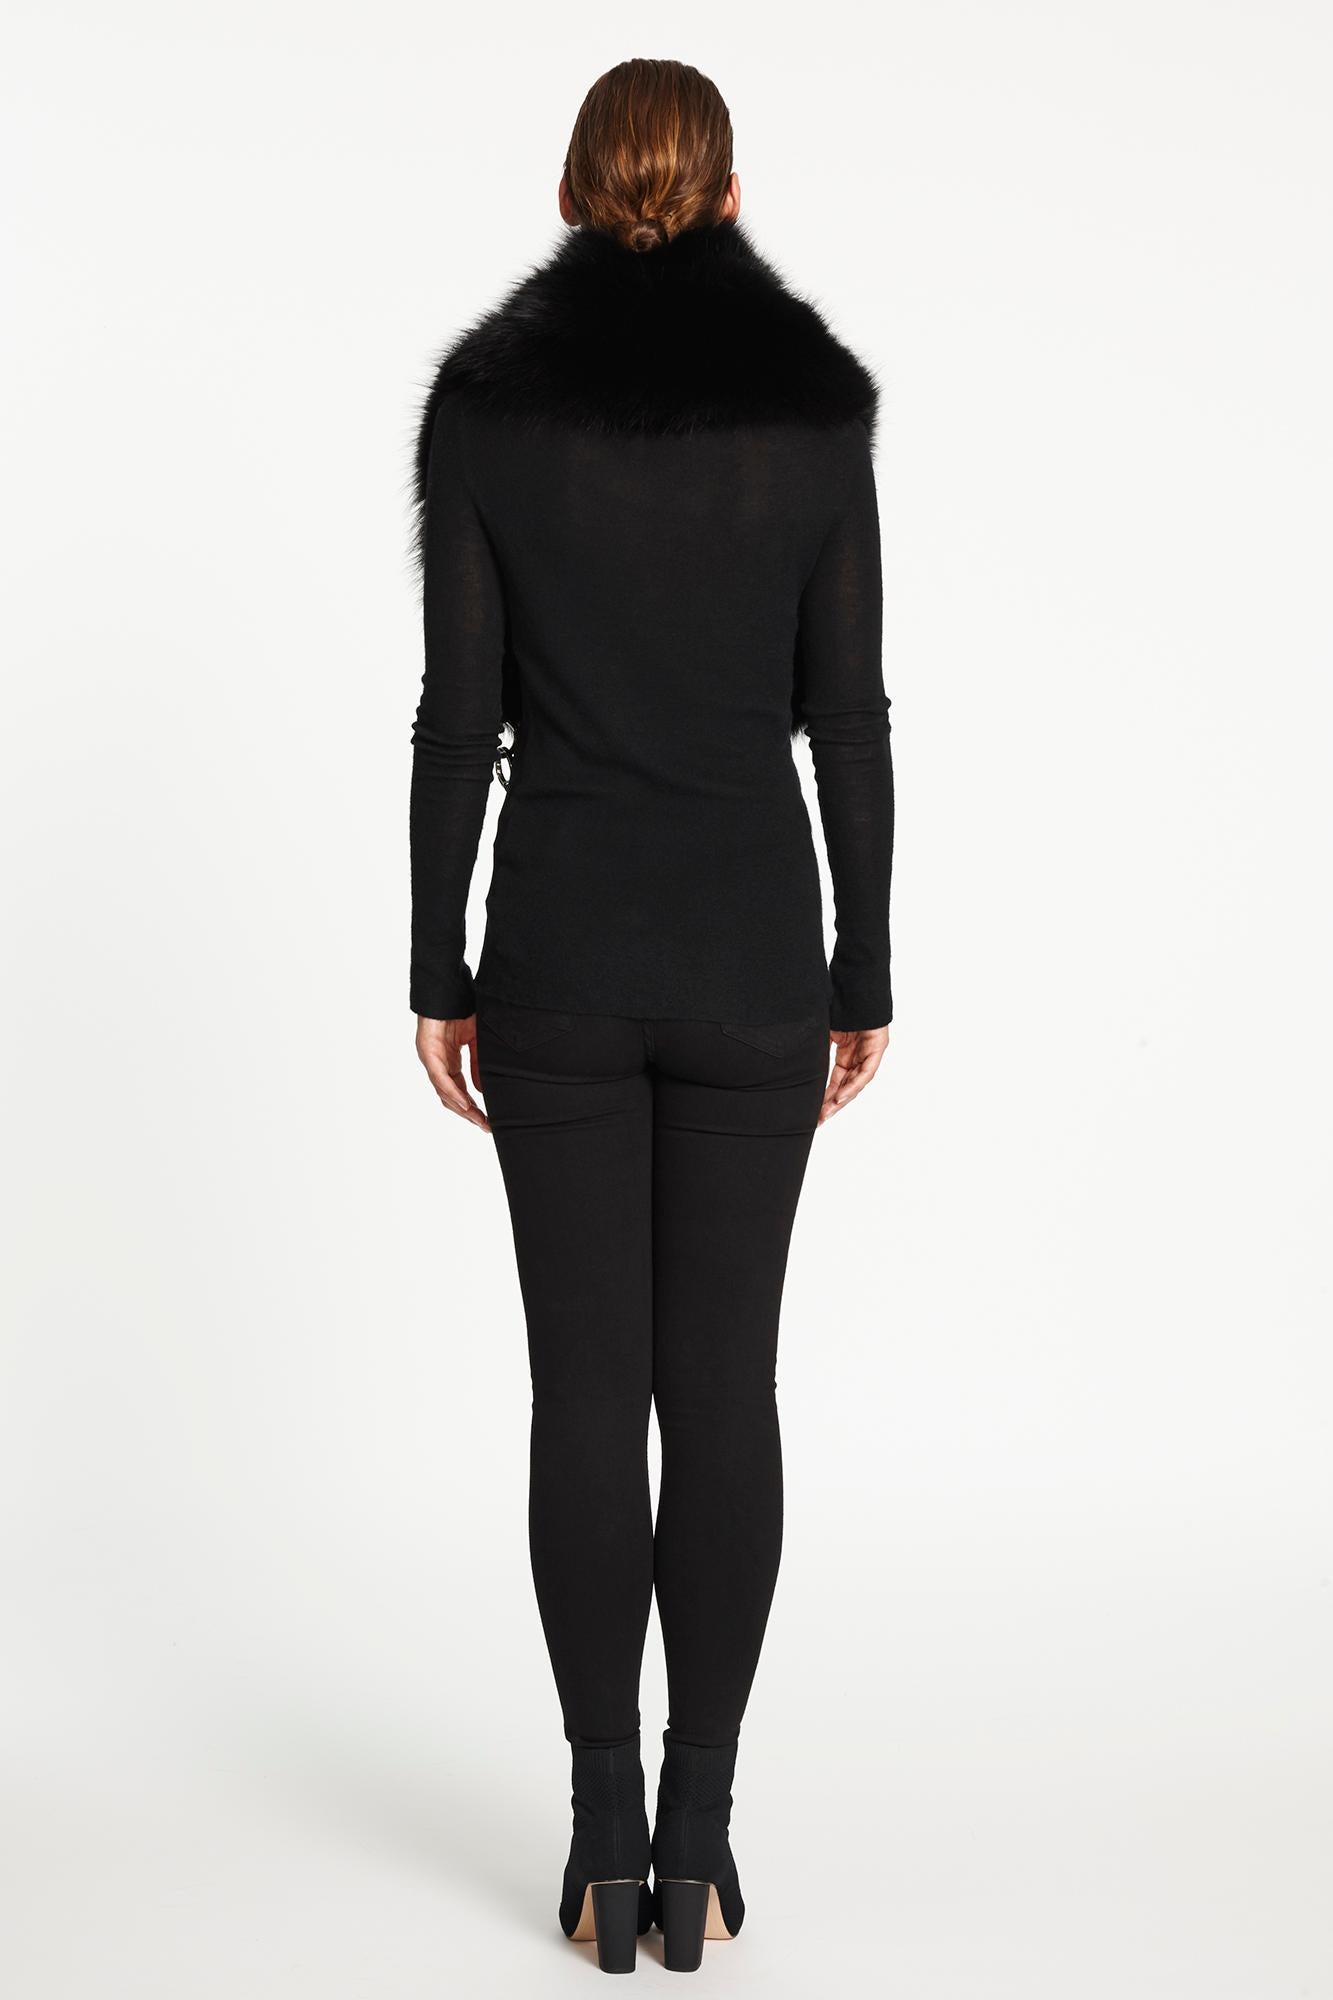 Verheyen London Chained Stole in Black Fox Fur & Chain - Brand New 9